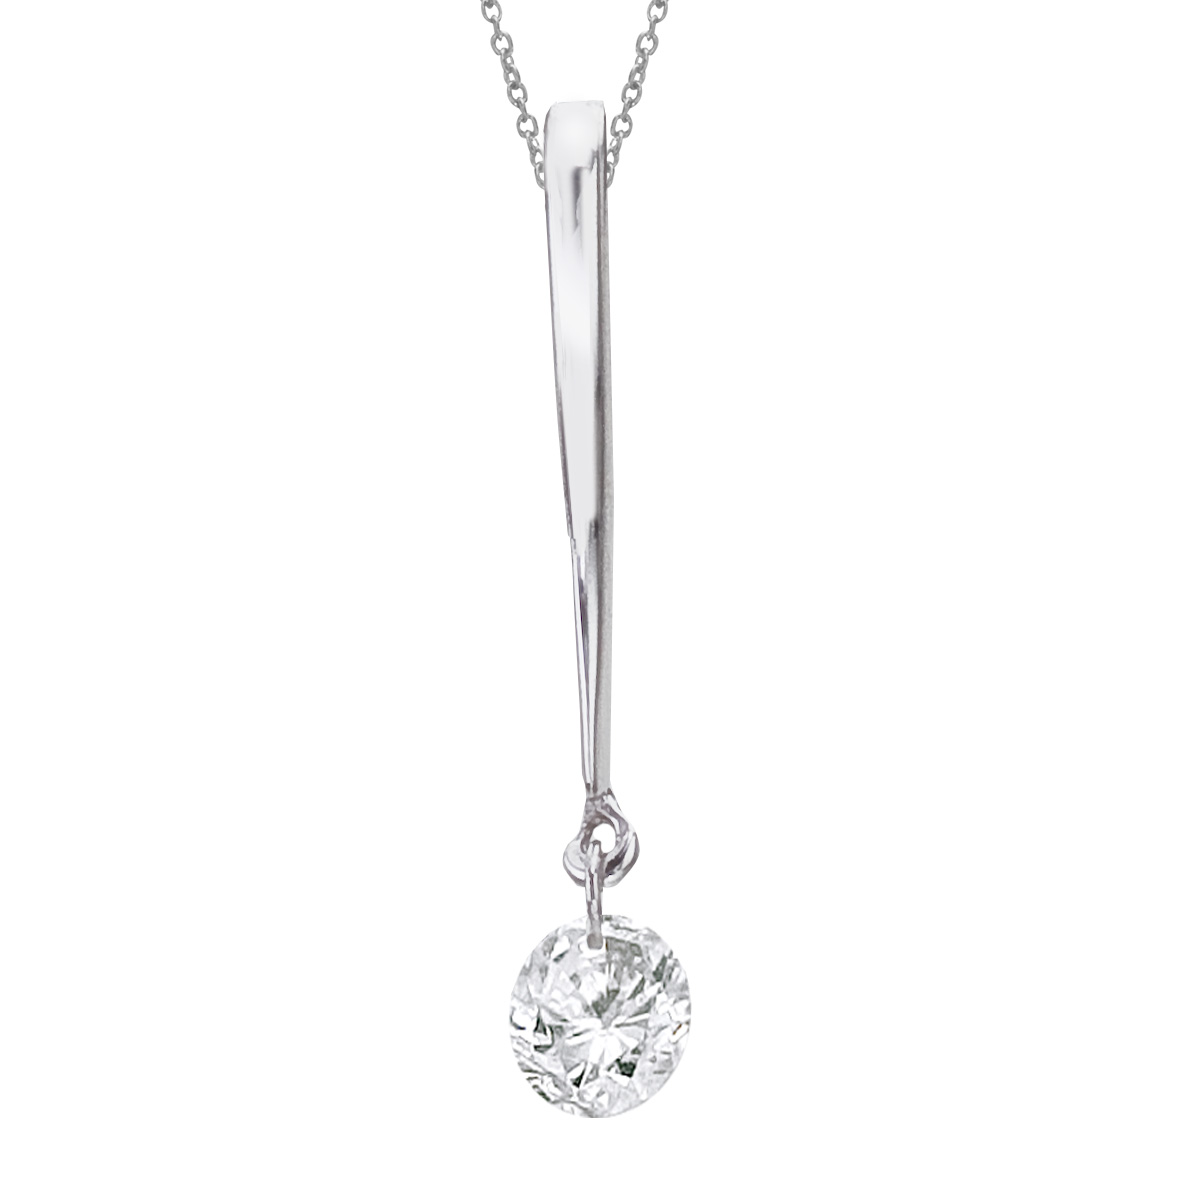 14k gold Dashinng Diamonds pendant with 0.08 total ct diamonds. The center dangling diamond dance...